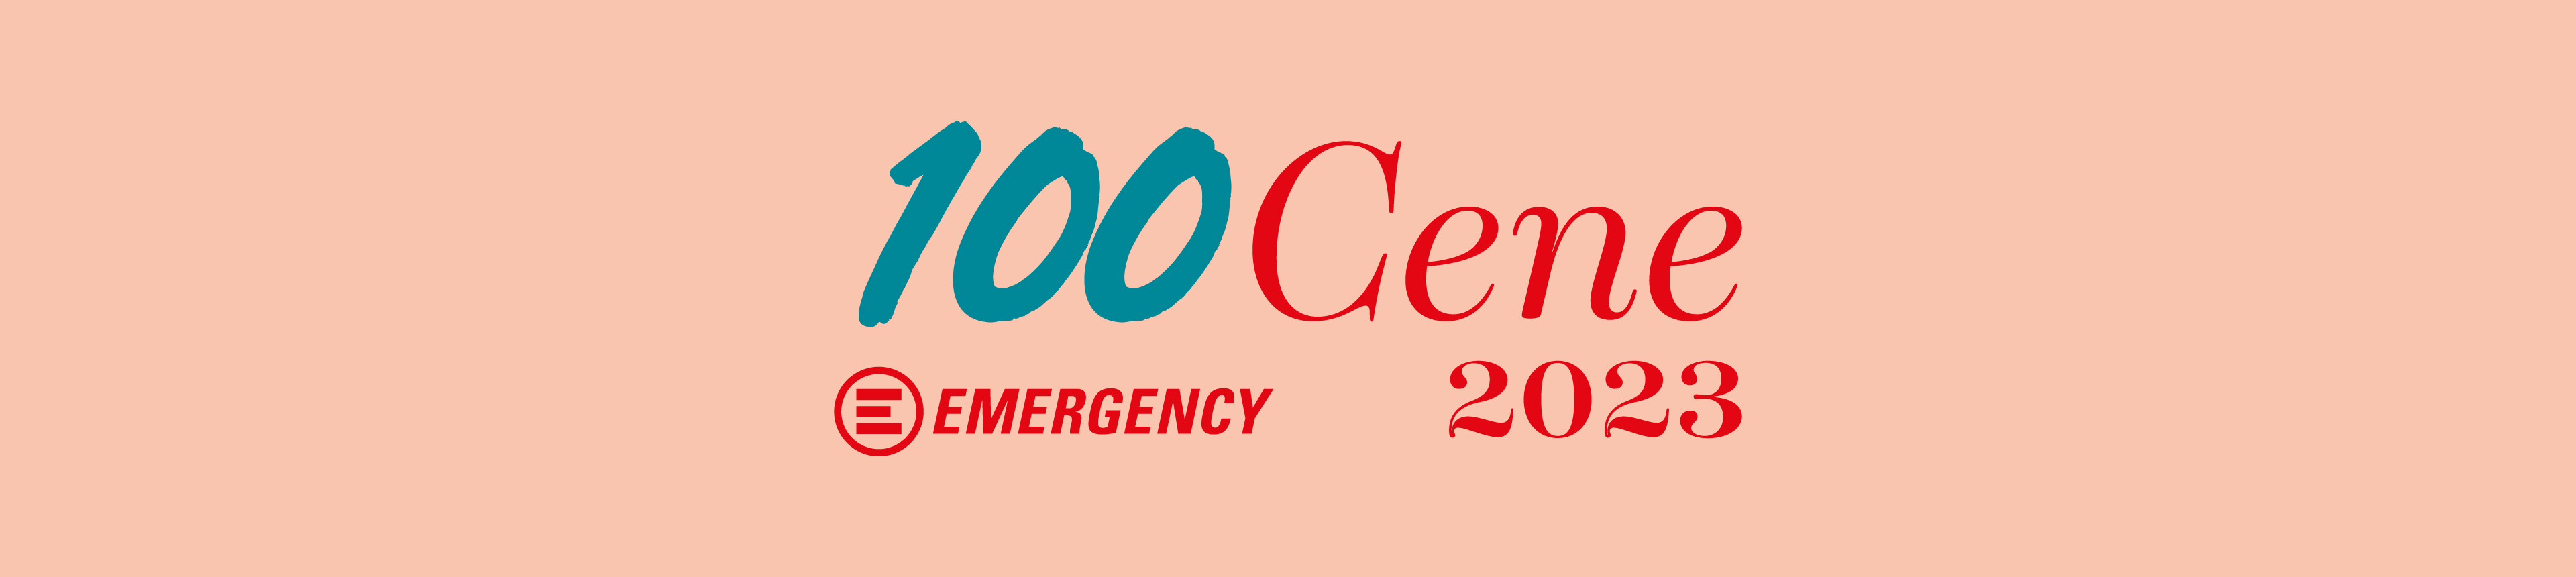 100 cene Emergency